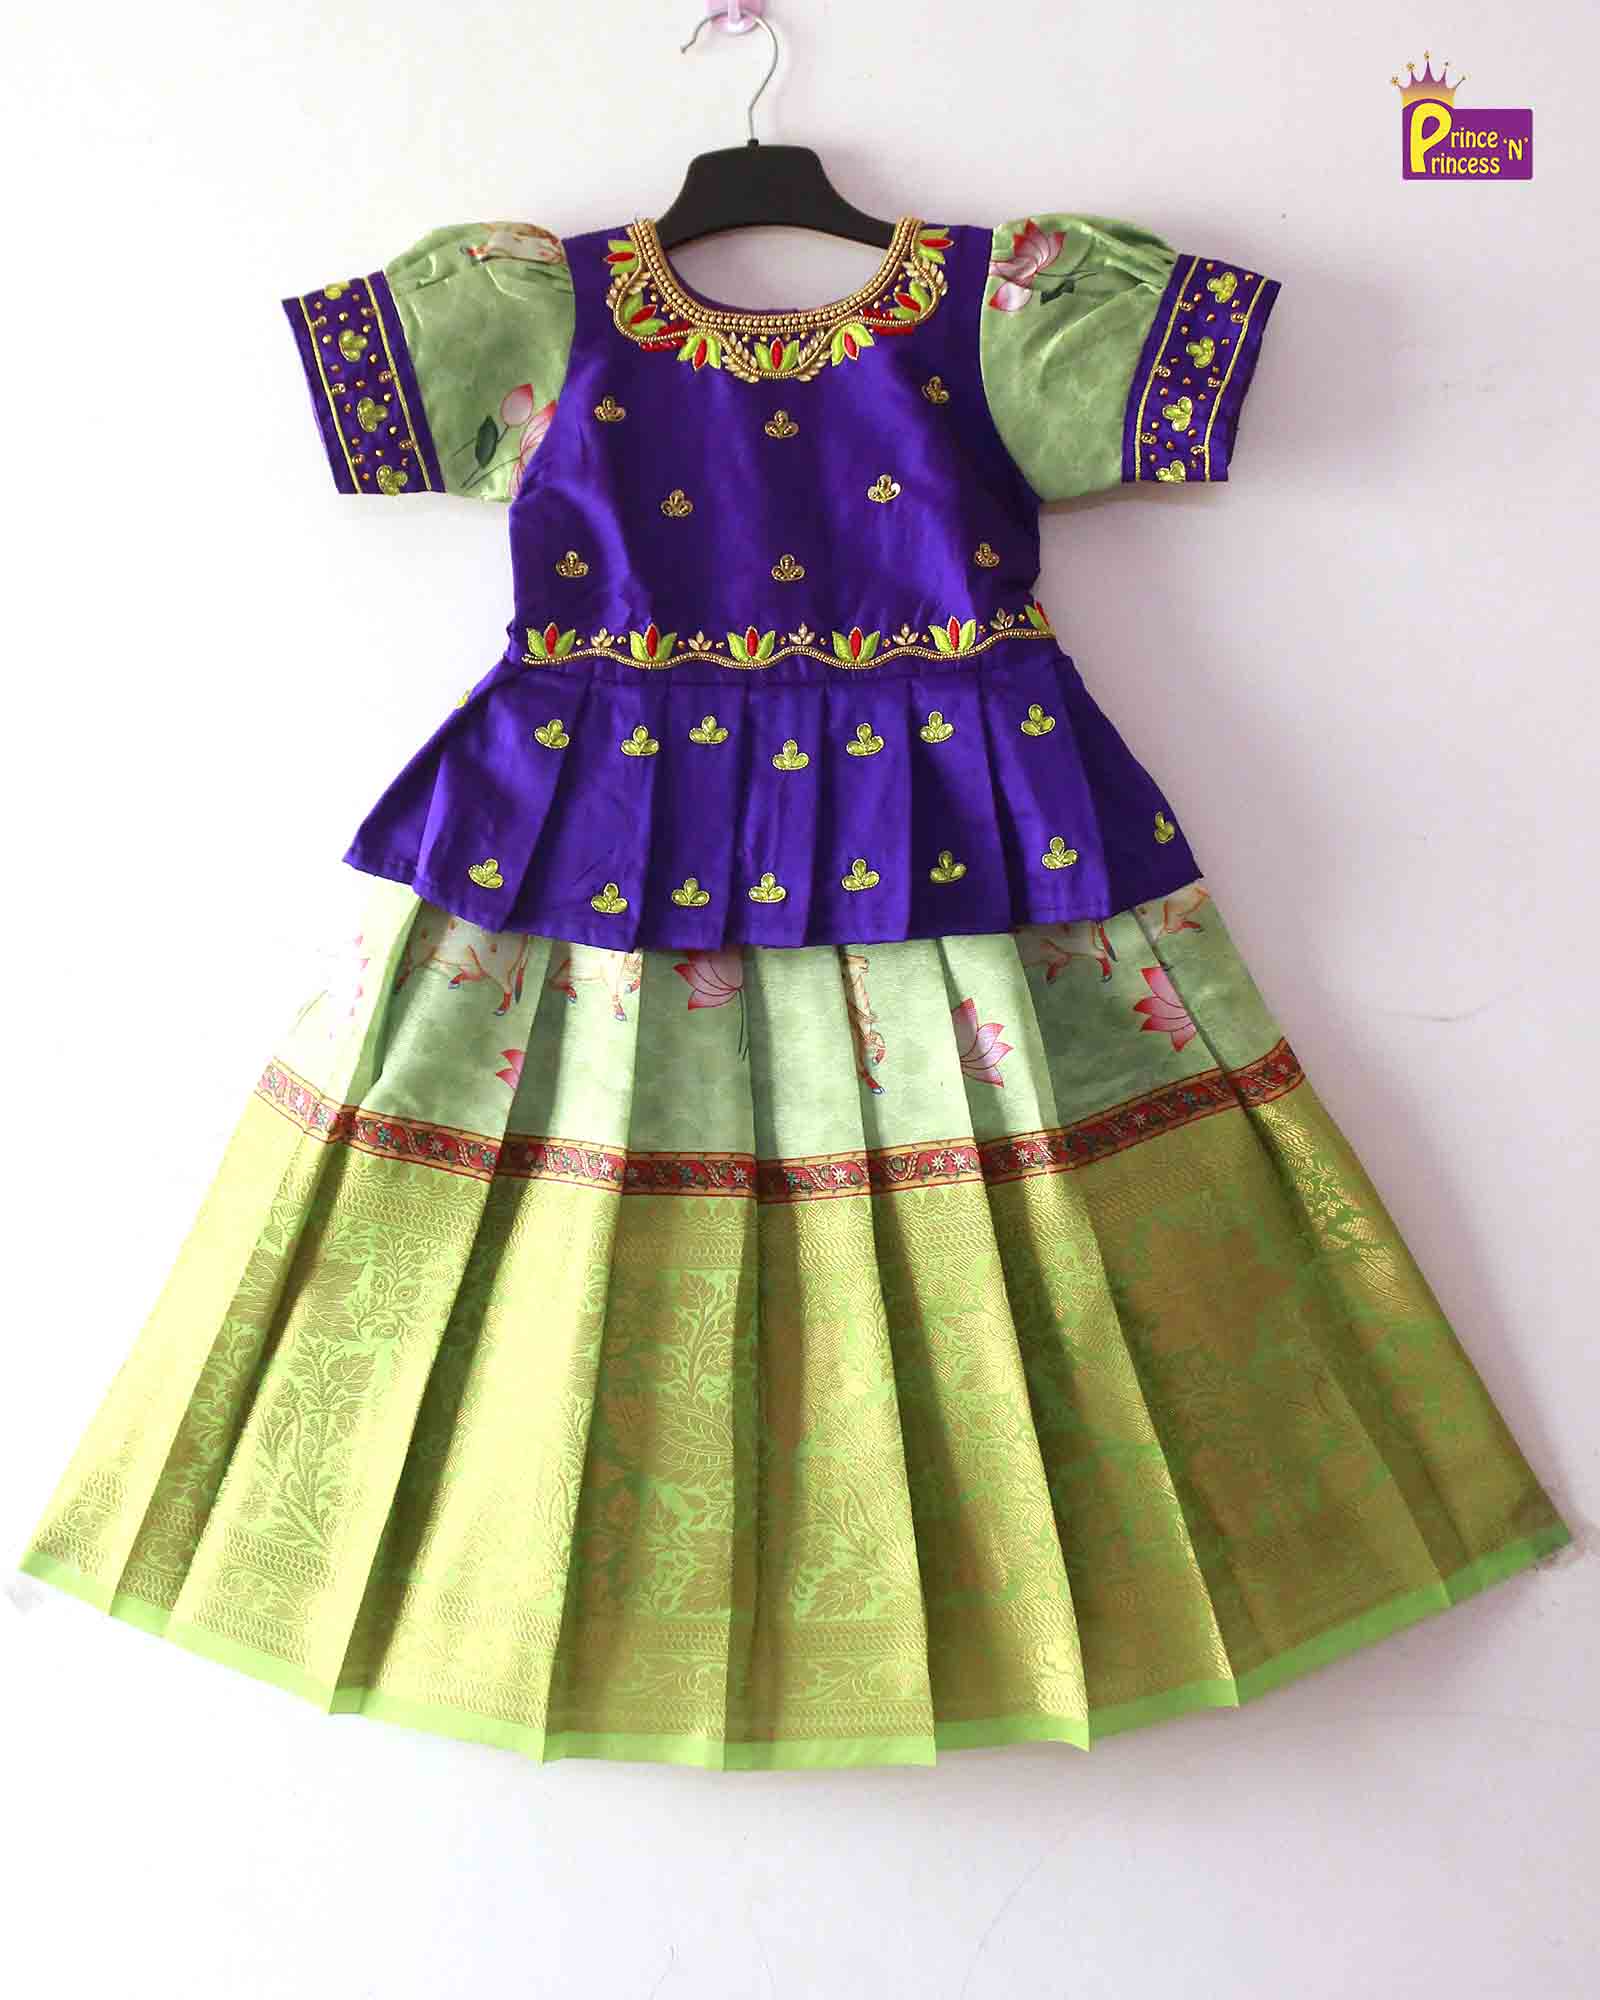 Buy Dhika Baby Girls Ethnic Wear Lehenga Choli Aari Work Pattu Pavadai,  Parrot Green and Pink at Amazon.in